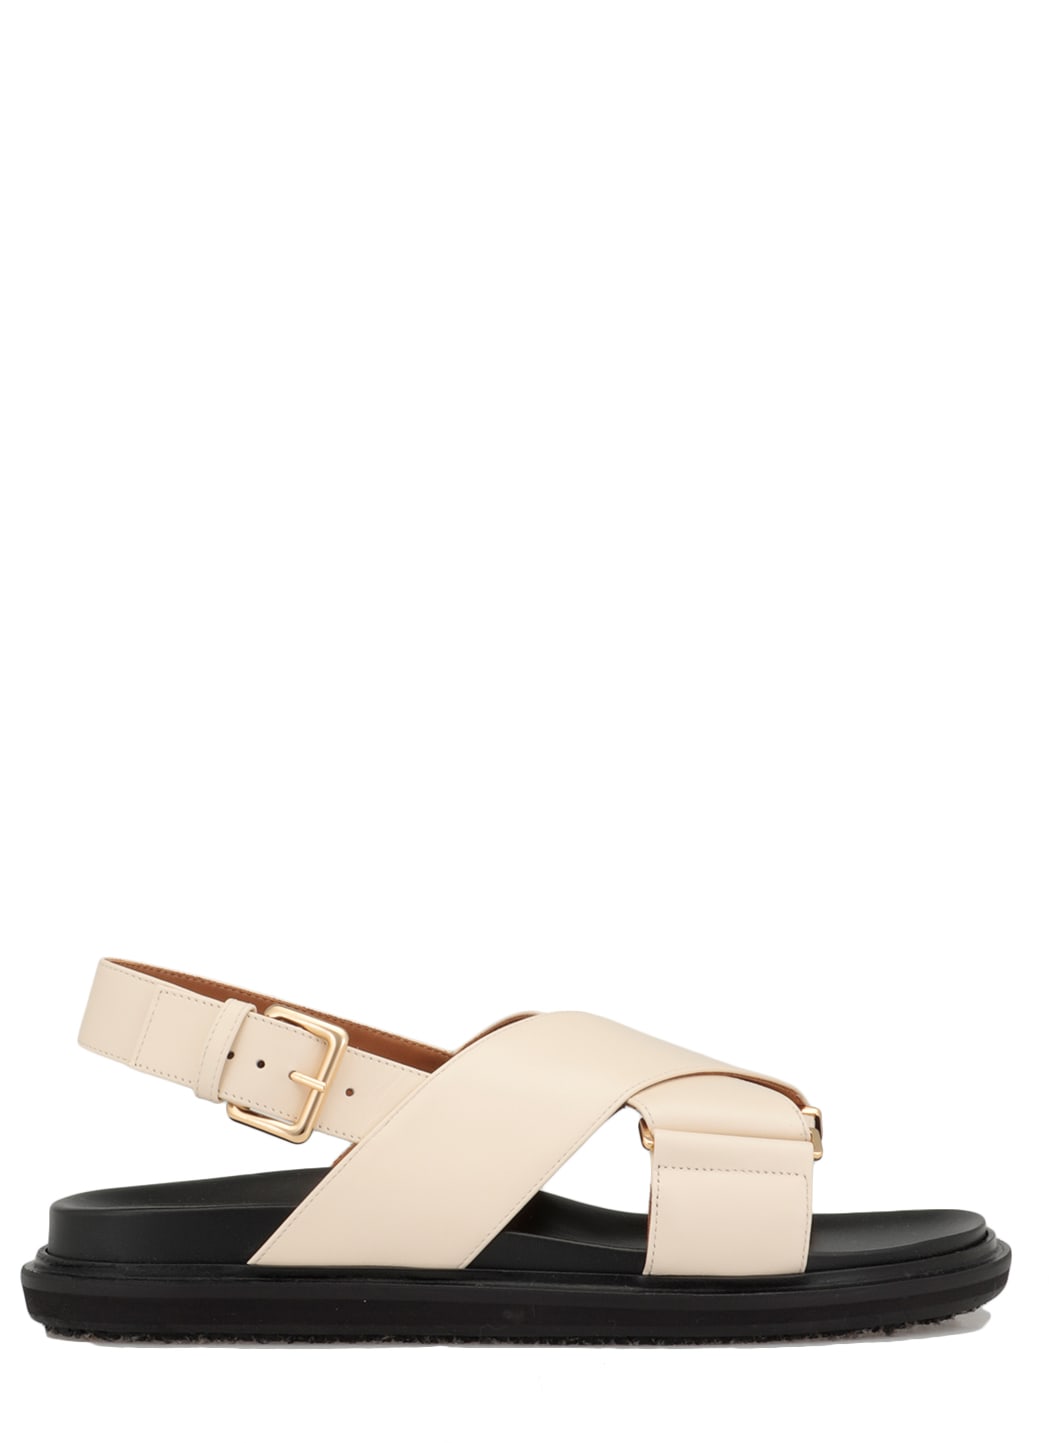 Marni Leather Sandal